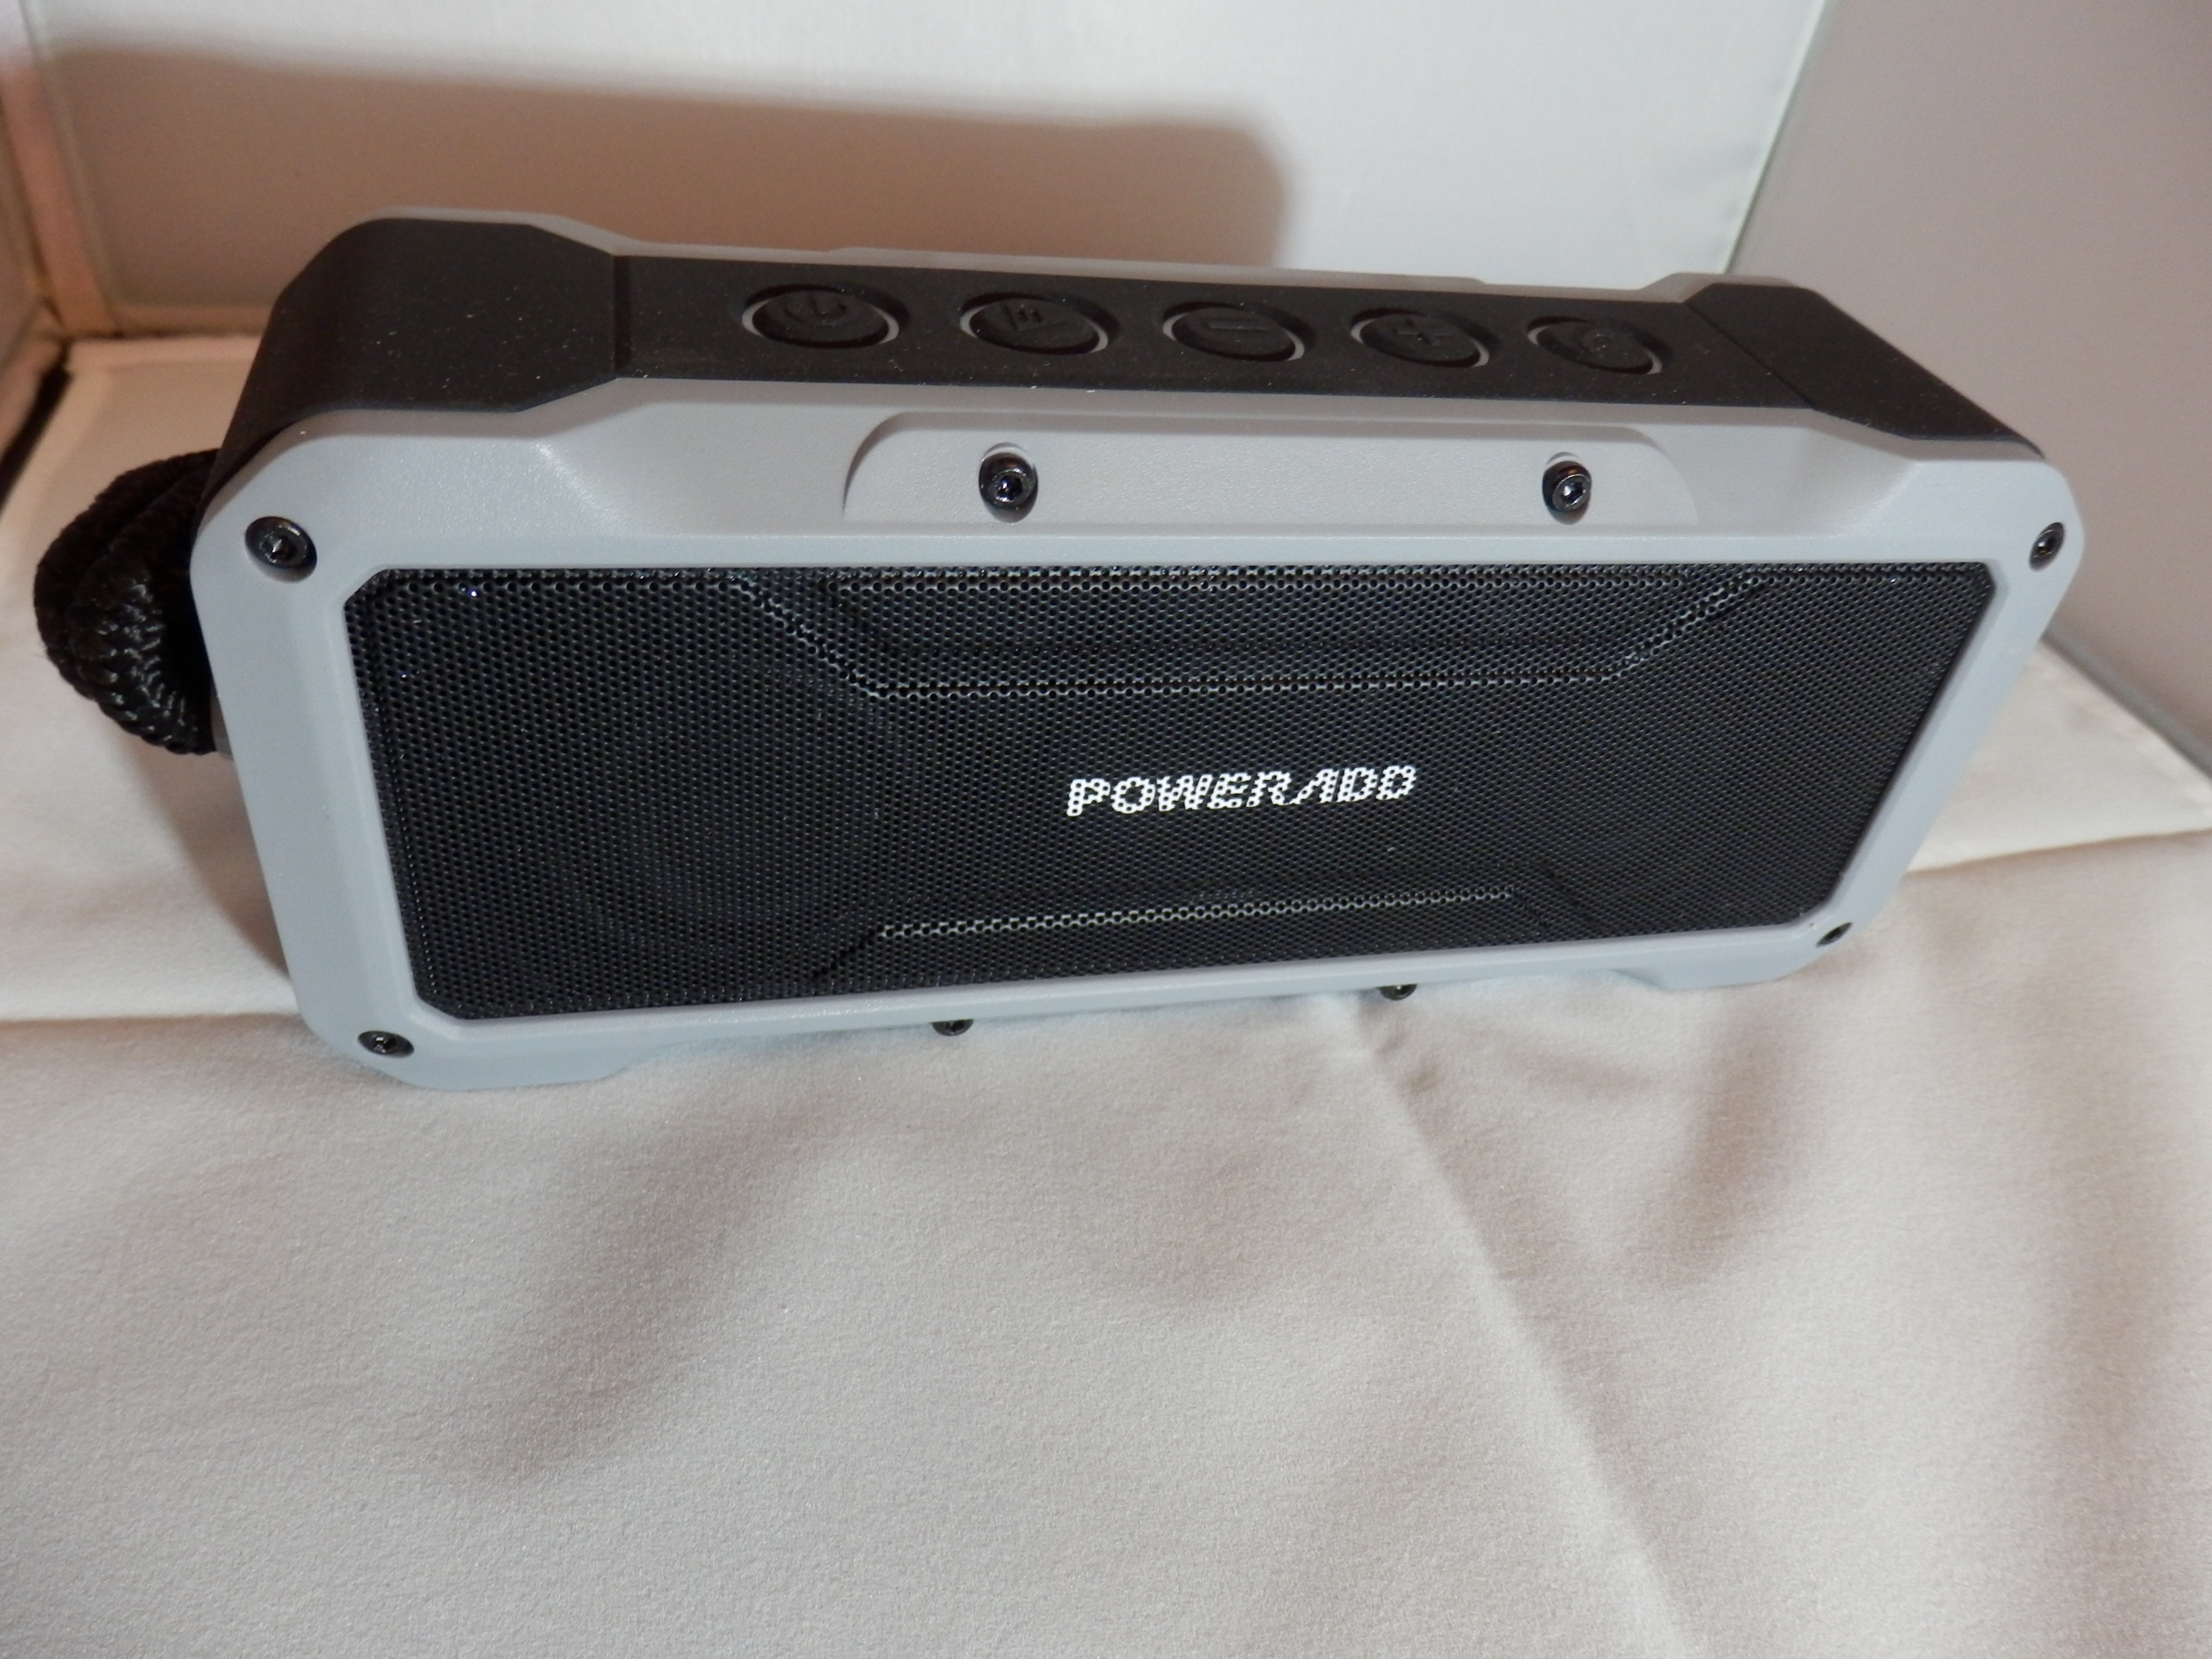 Poweradd Bluetooth 4.2 Speaker 36W with 4 Drivers IPX7 Waterproof